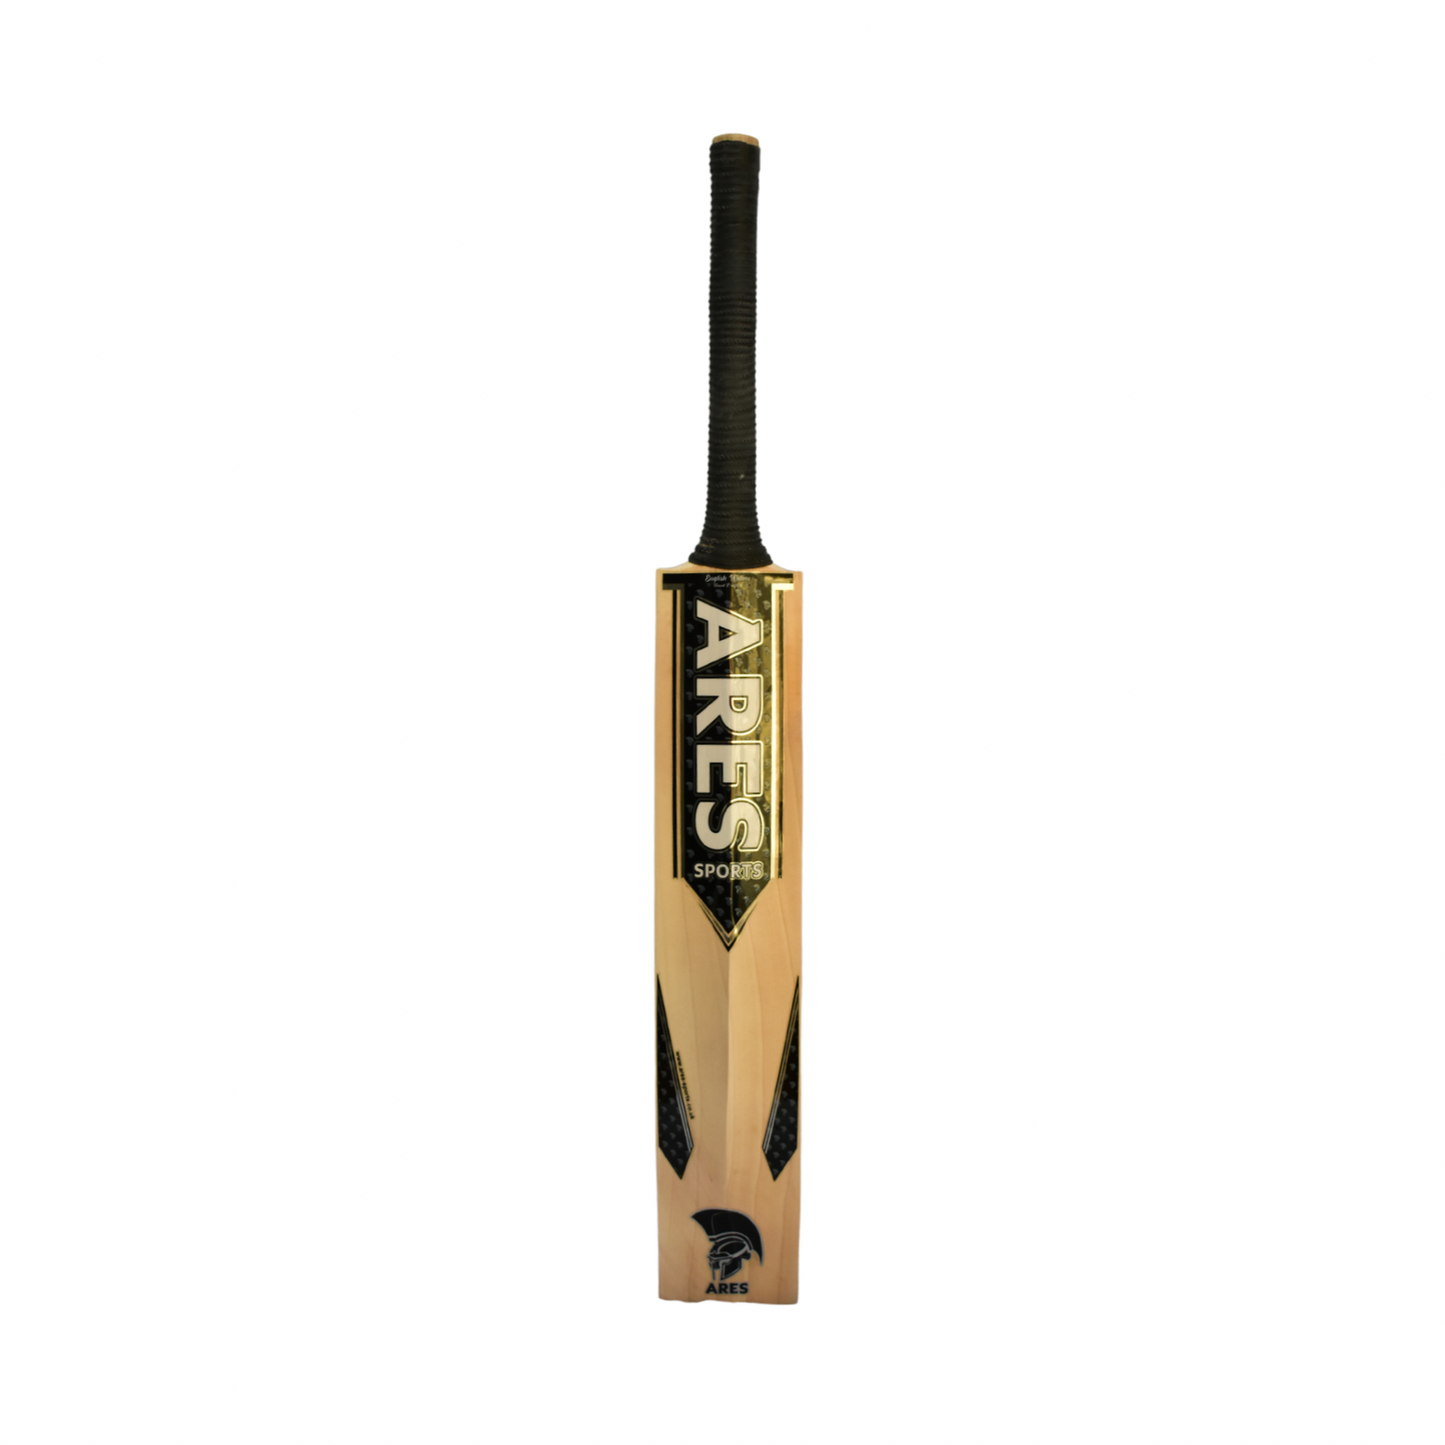 Ares Thor Edition Cricket Bat - Junior Size 6 (B)